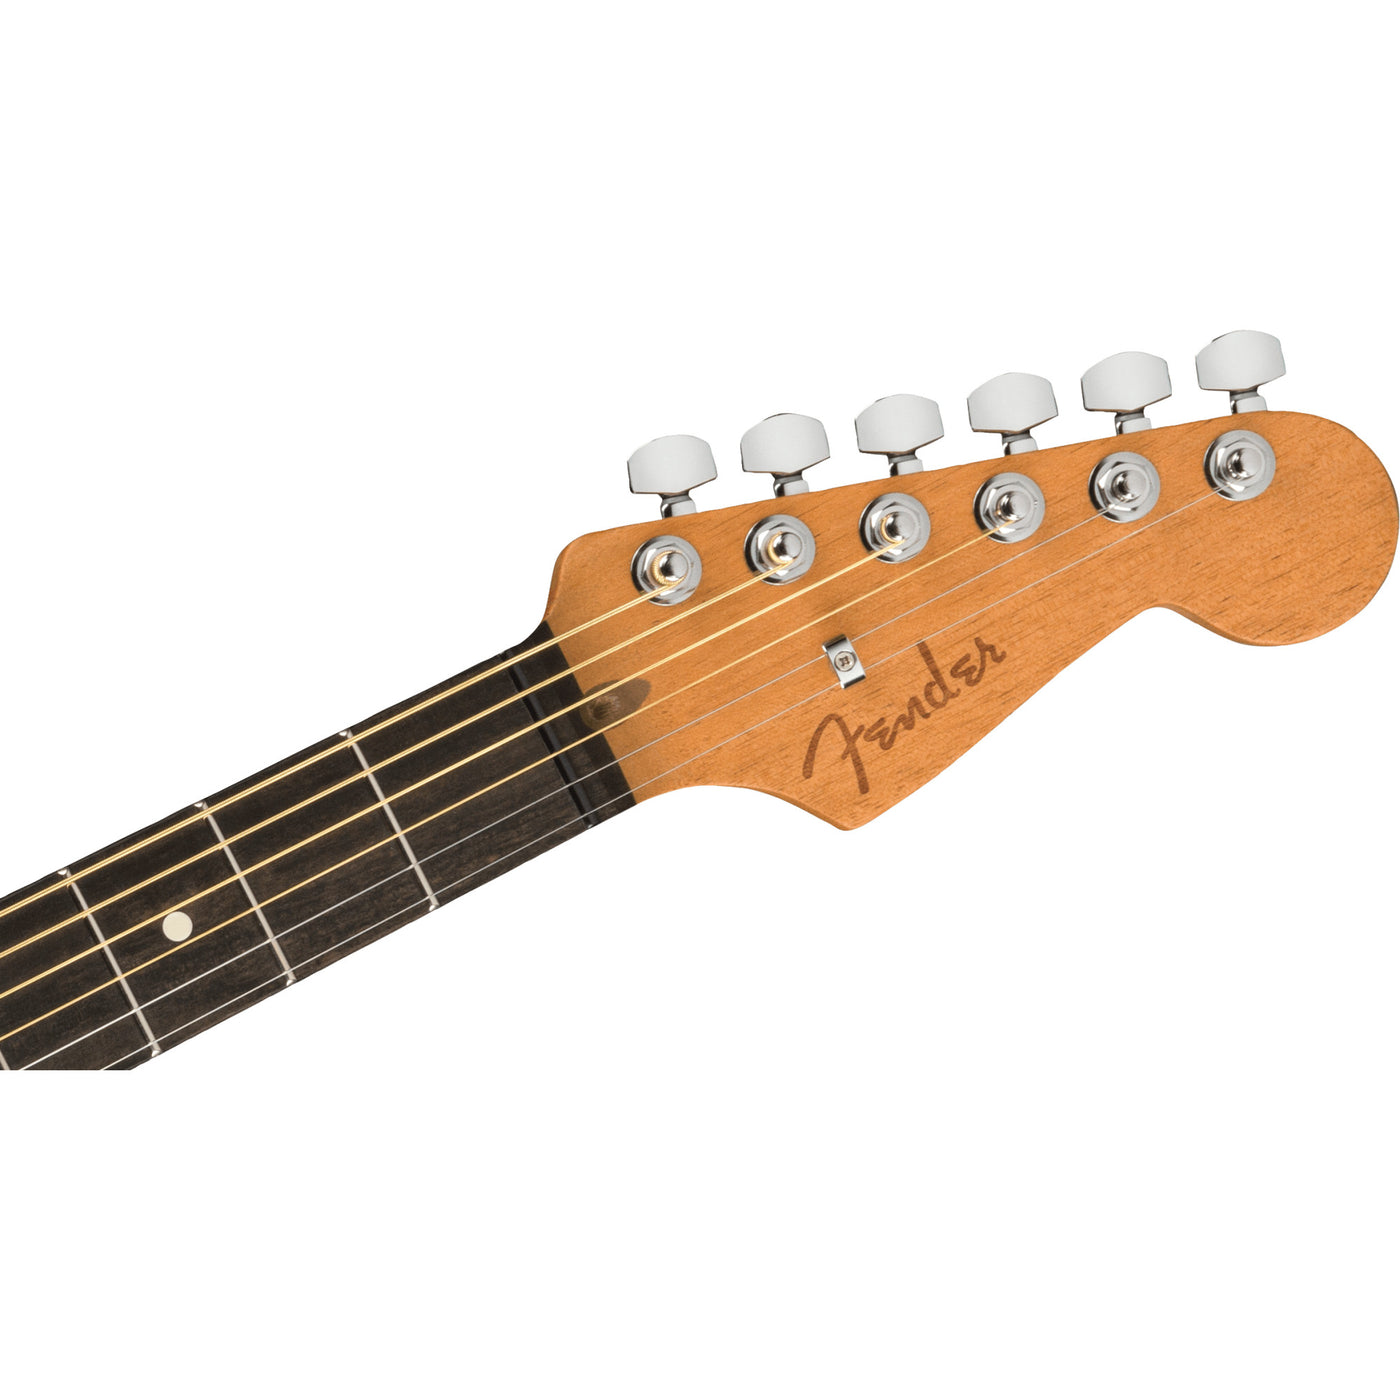 Fender American Acoustasonic Jazzmaster Electric Guitar, Natural (0972313221)